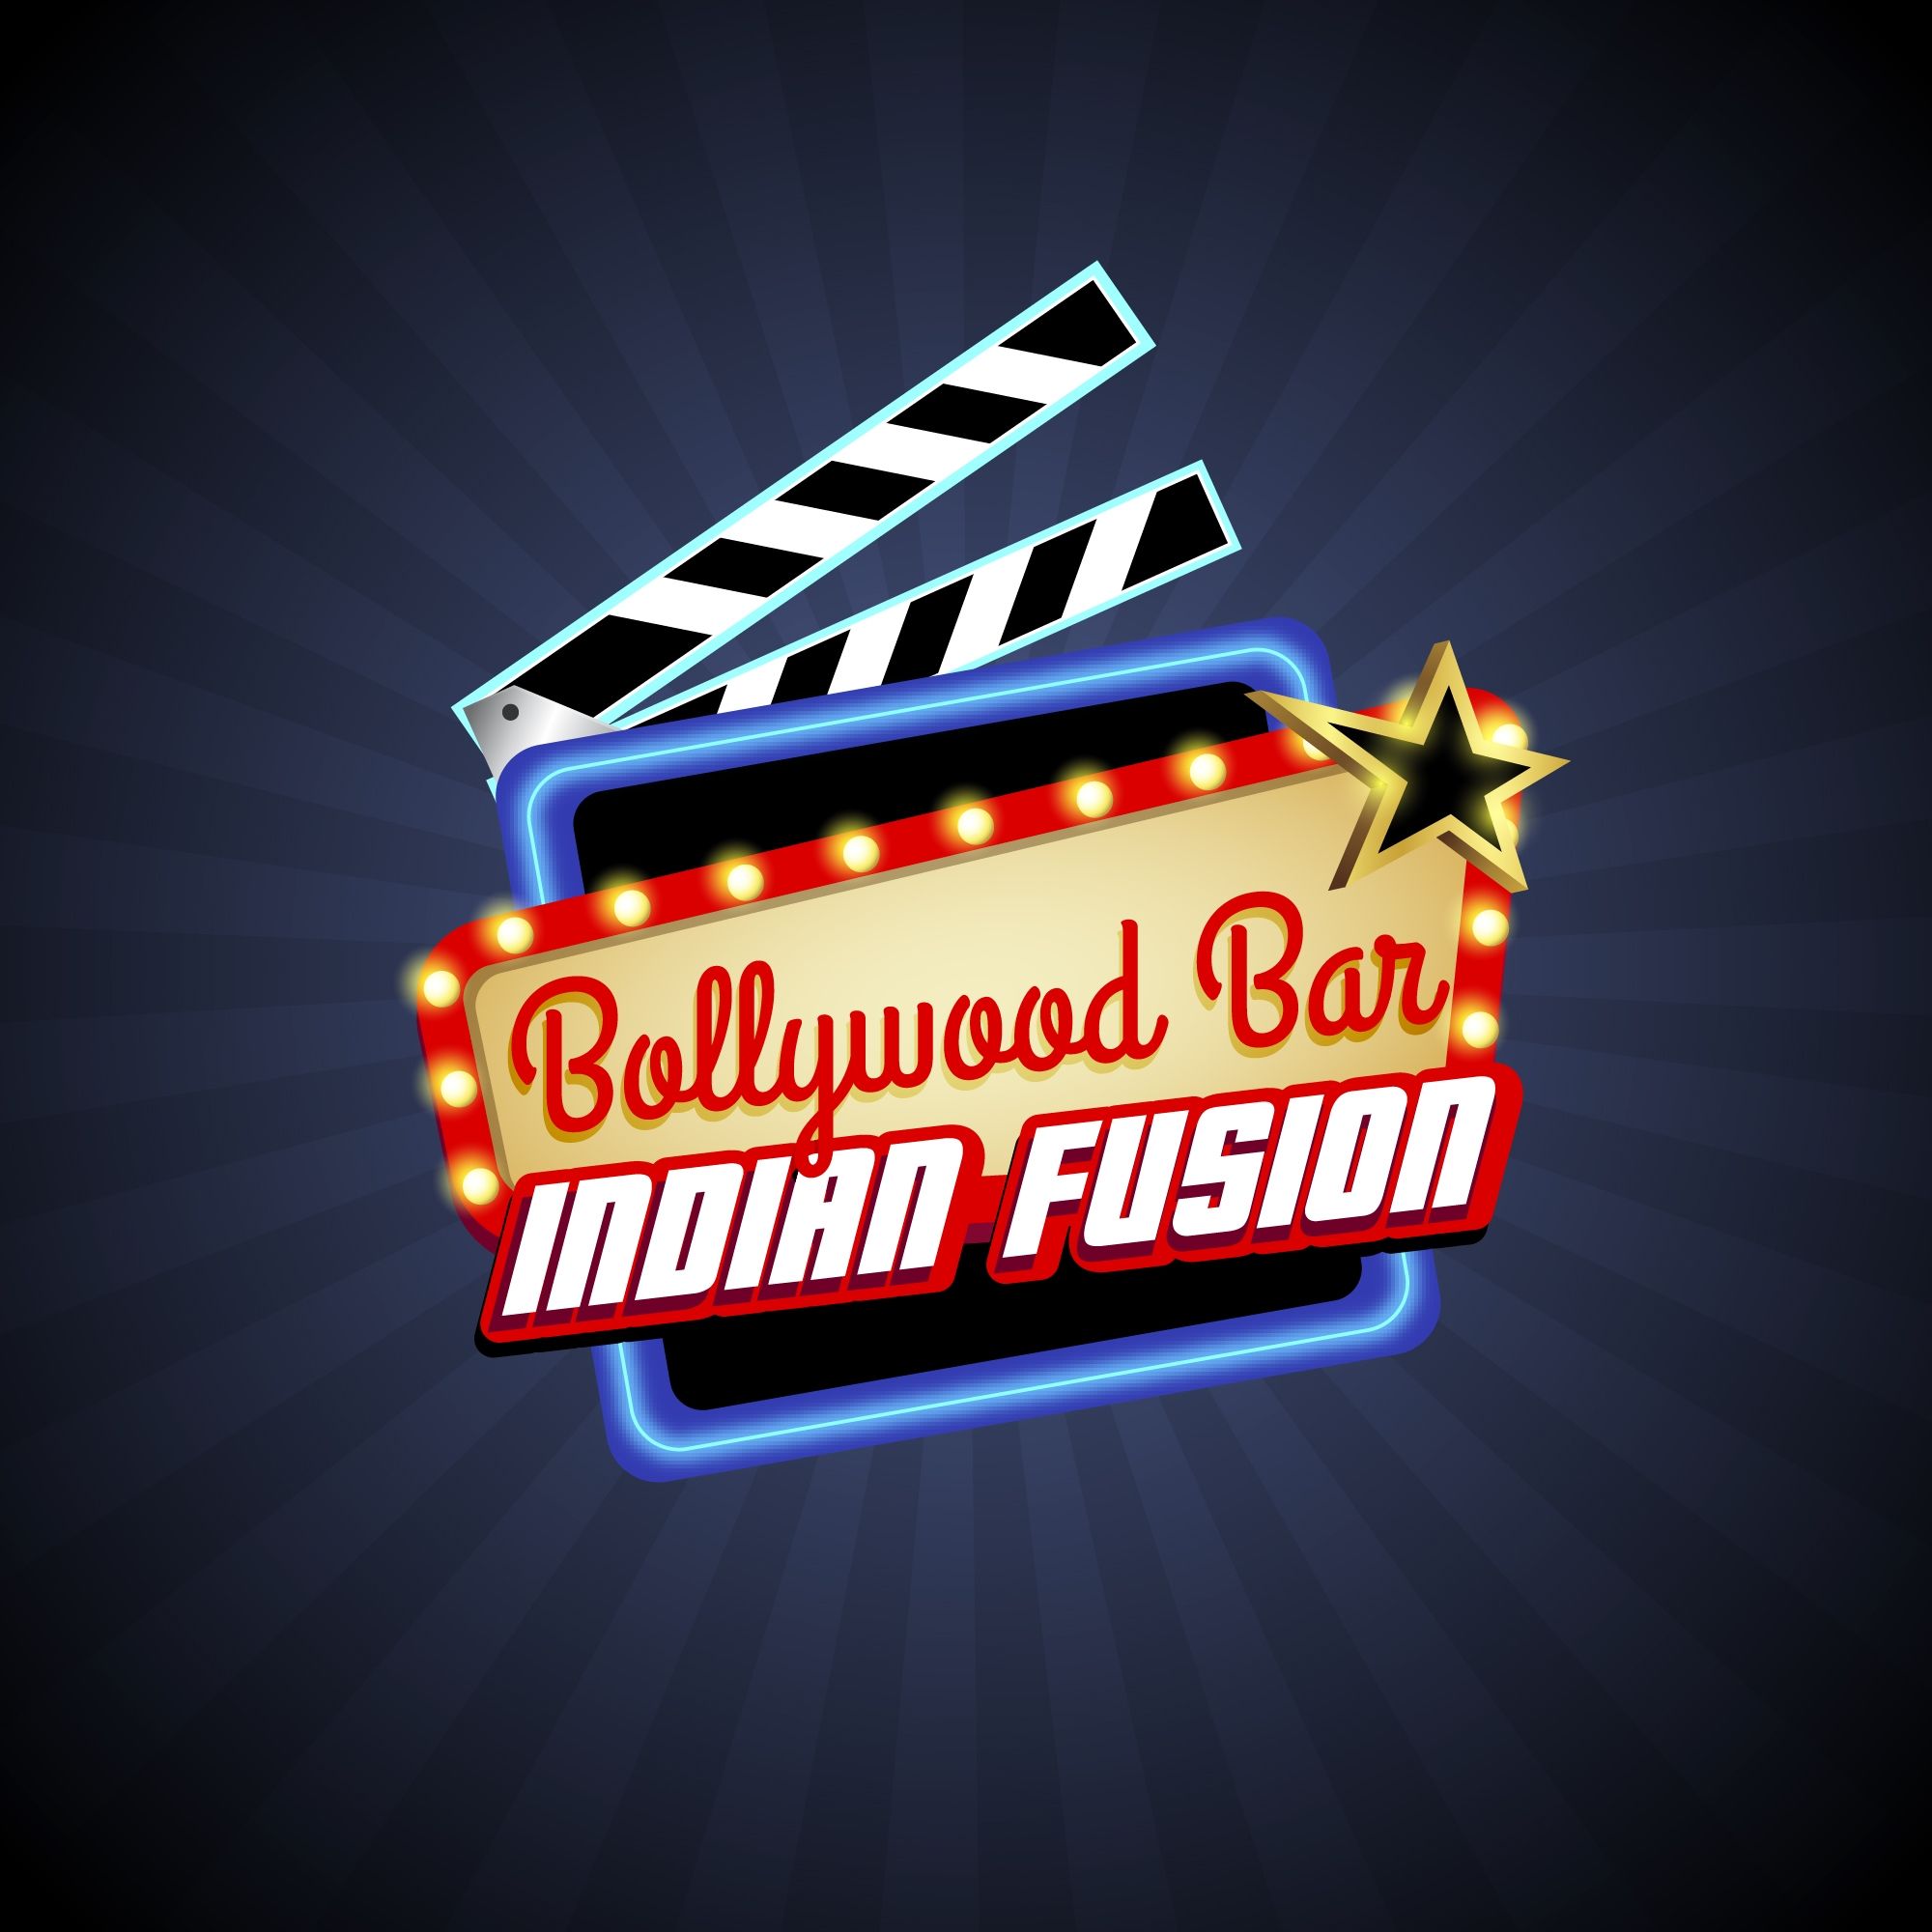 Bollywoodbar Indian fusion